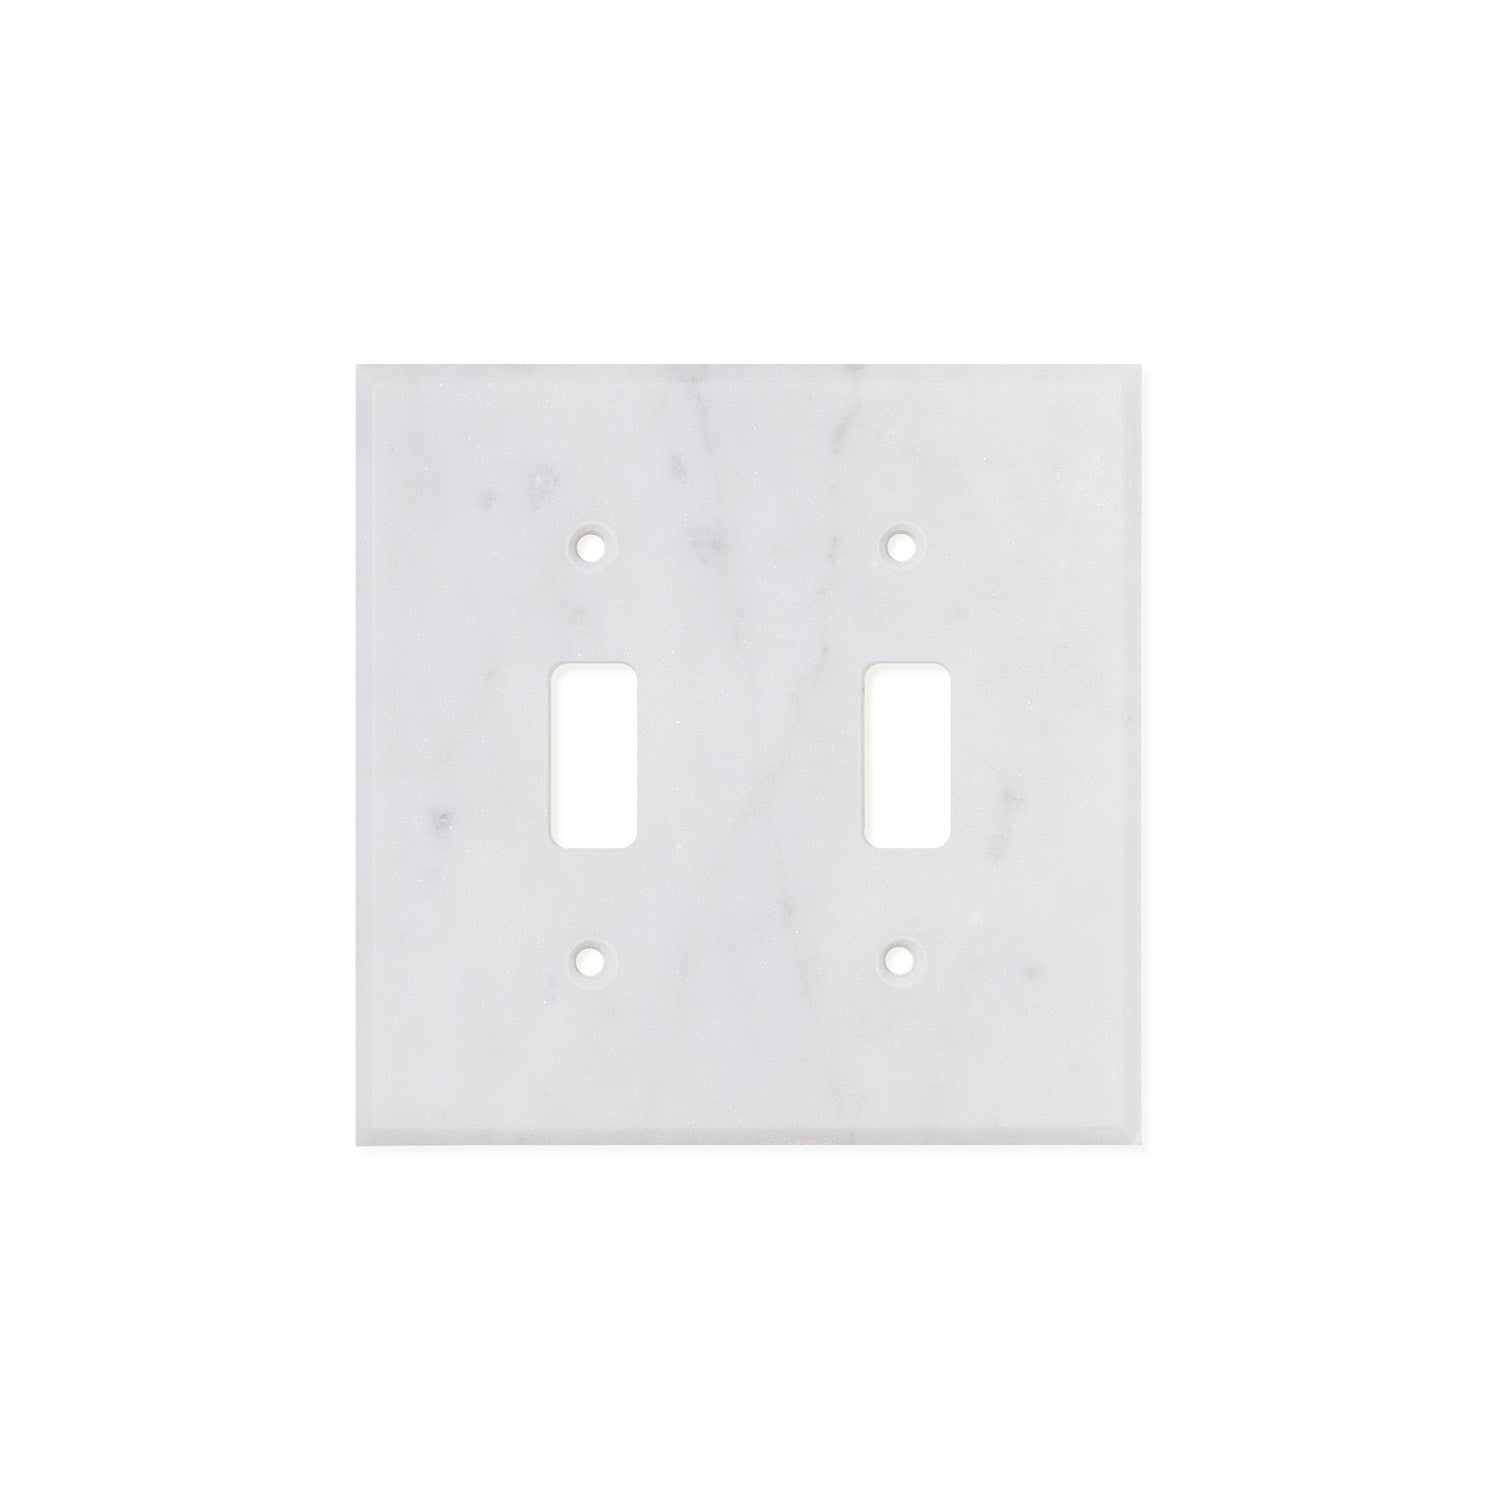 Bianco Carrara (Carrara White) Marble Switch Plate Cover, Honed (2 TOGGLE) - Tilephile